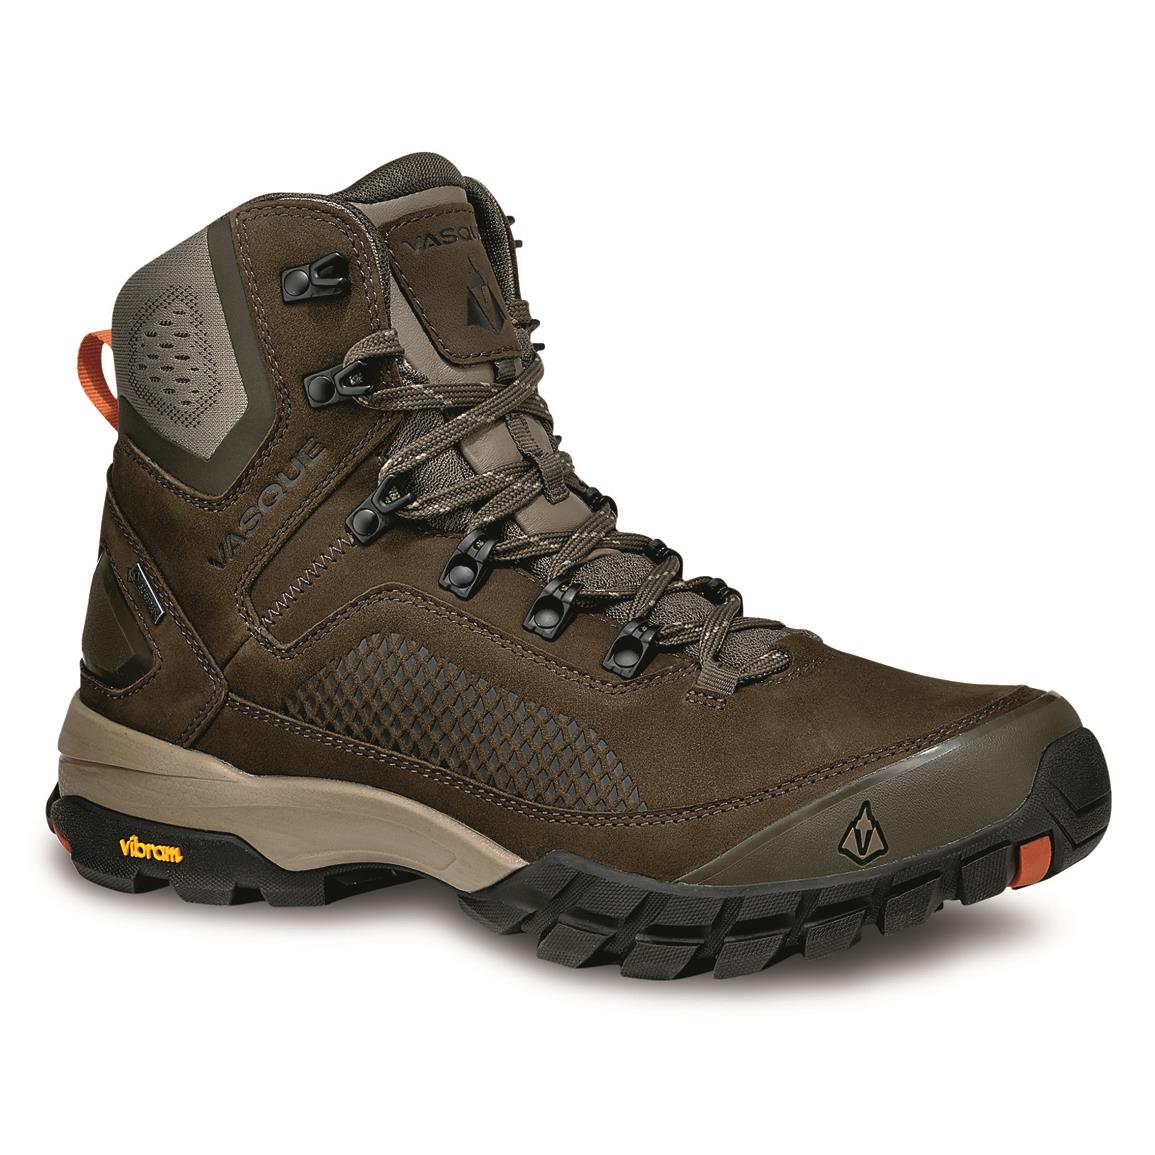 Vasque Men's Talus XT GORE-TEX Hiking Boots, Brown Olive/rust